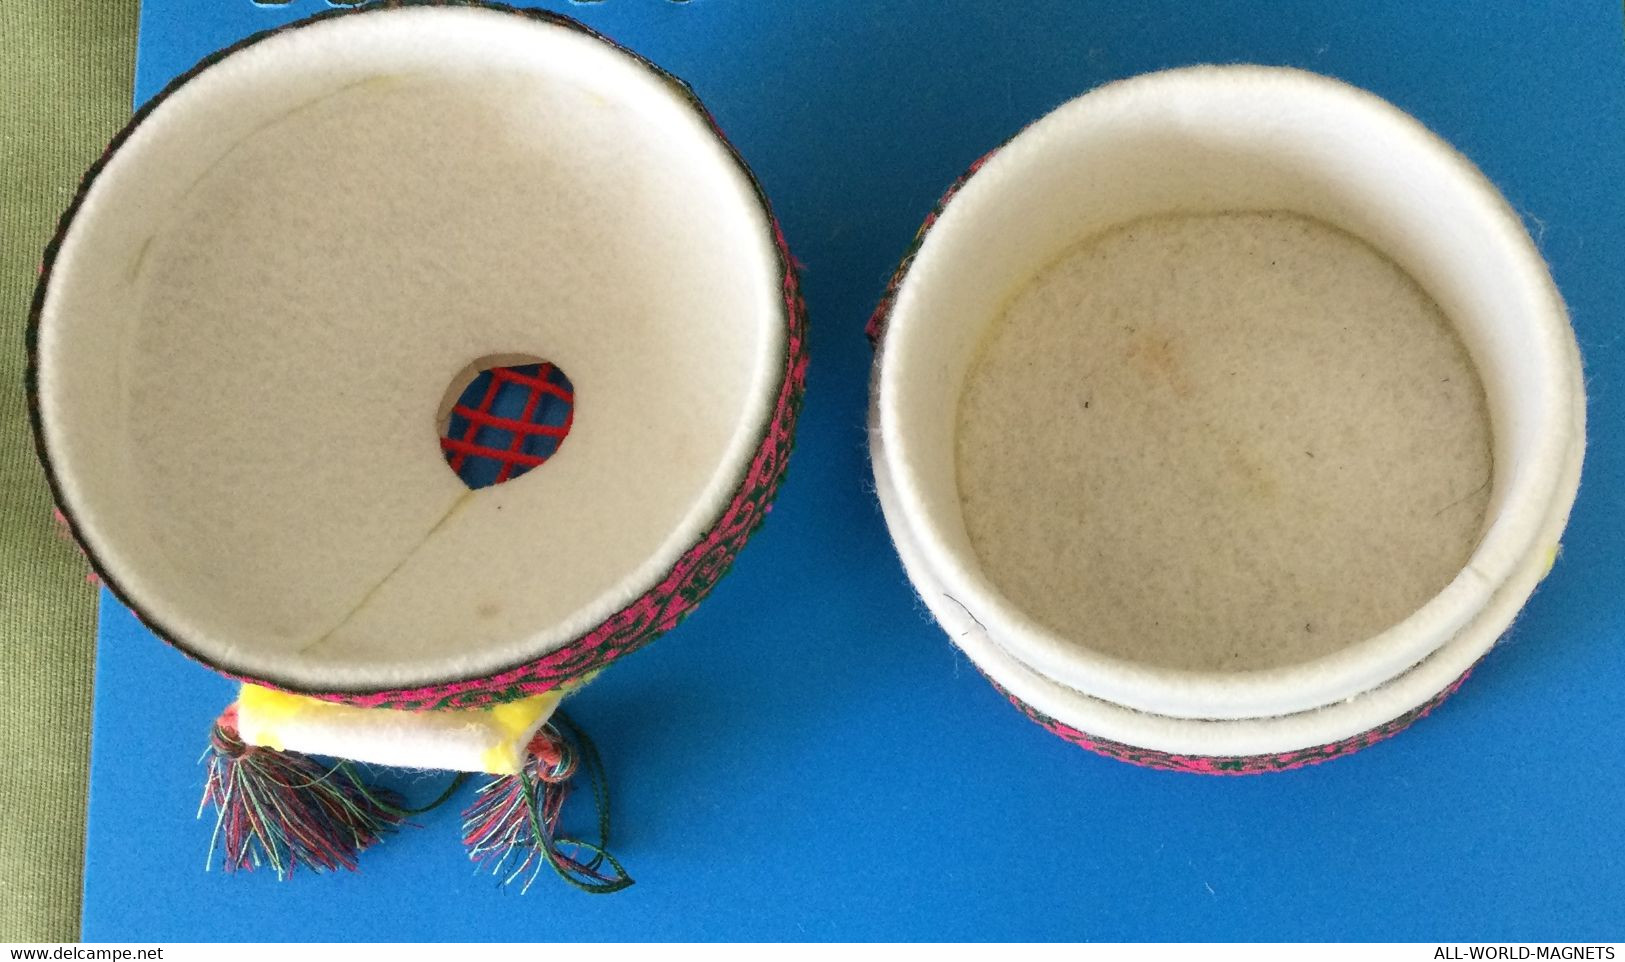 Vintage Decorative Felt Fabric Kyrgyzstan Yurta Box with lid, from Kyrgyzstan